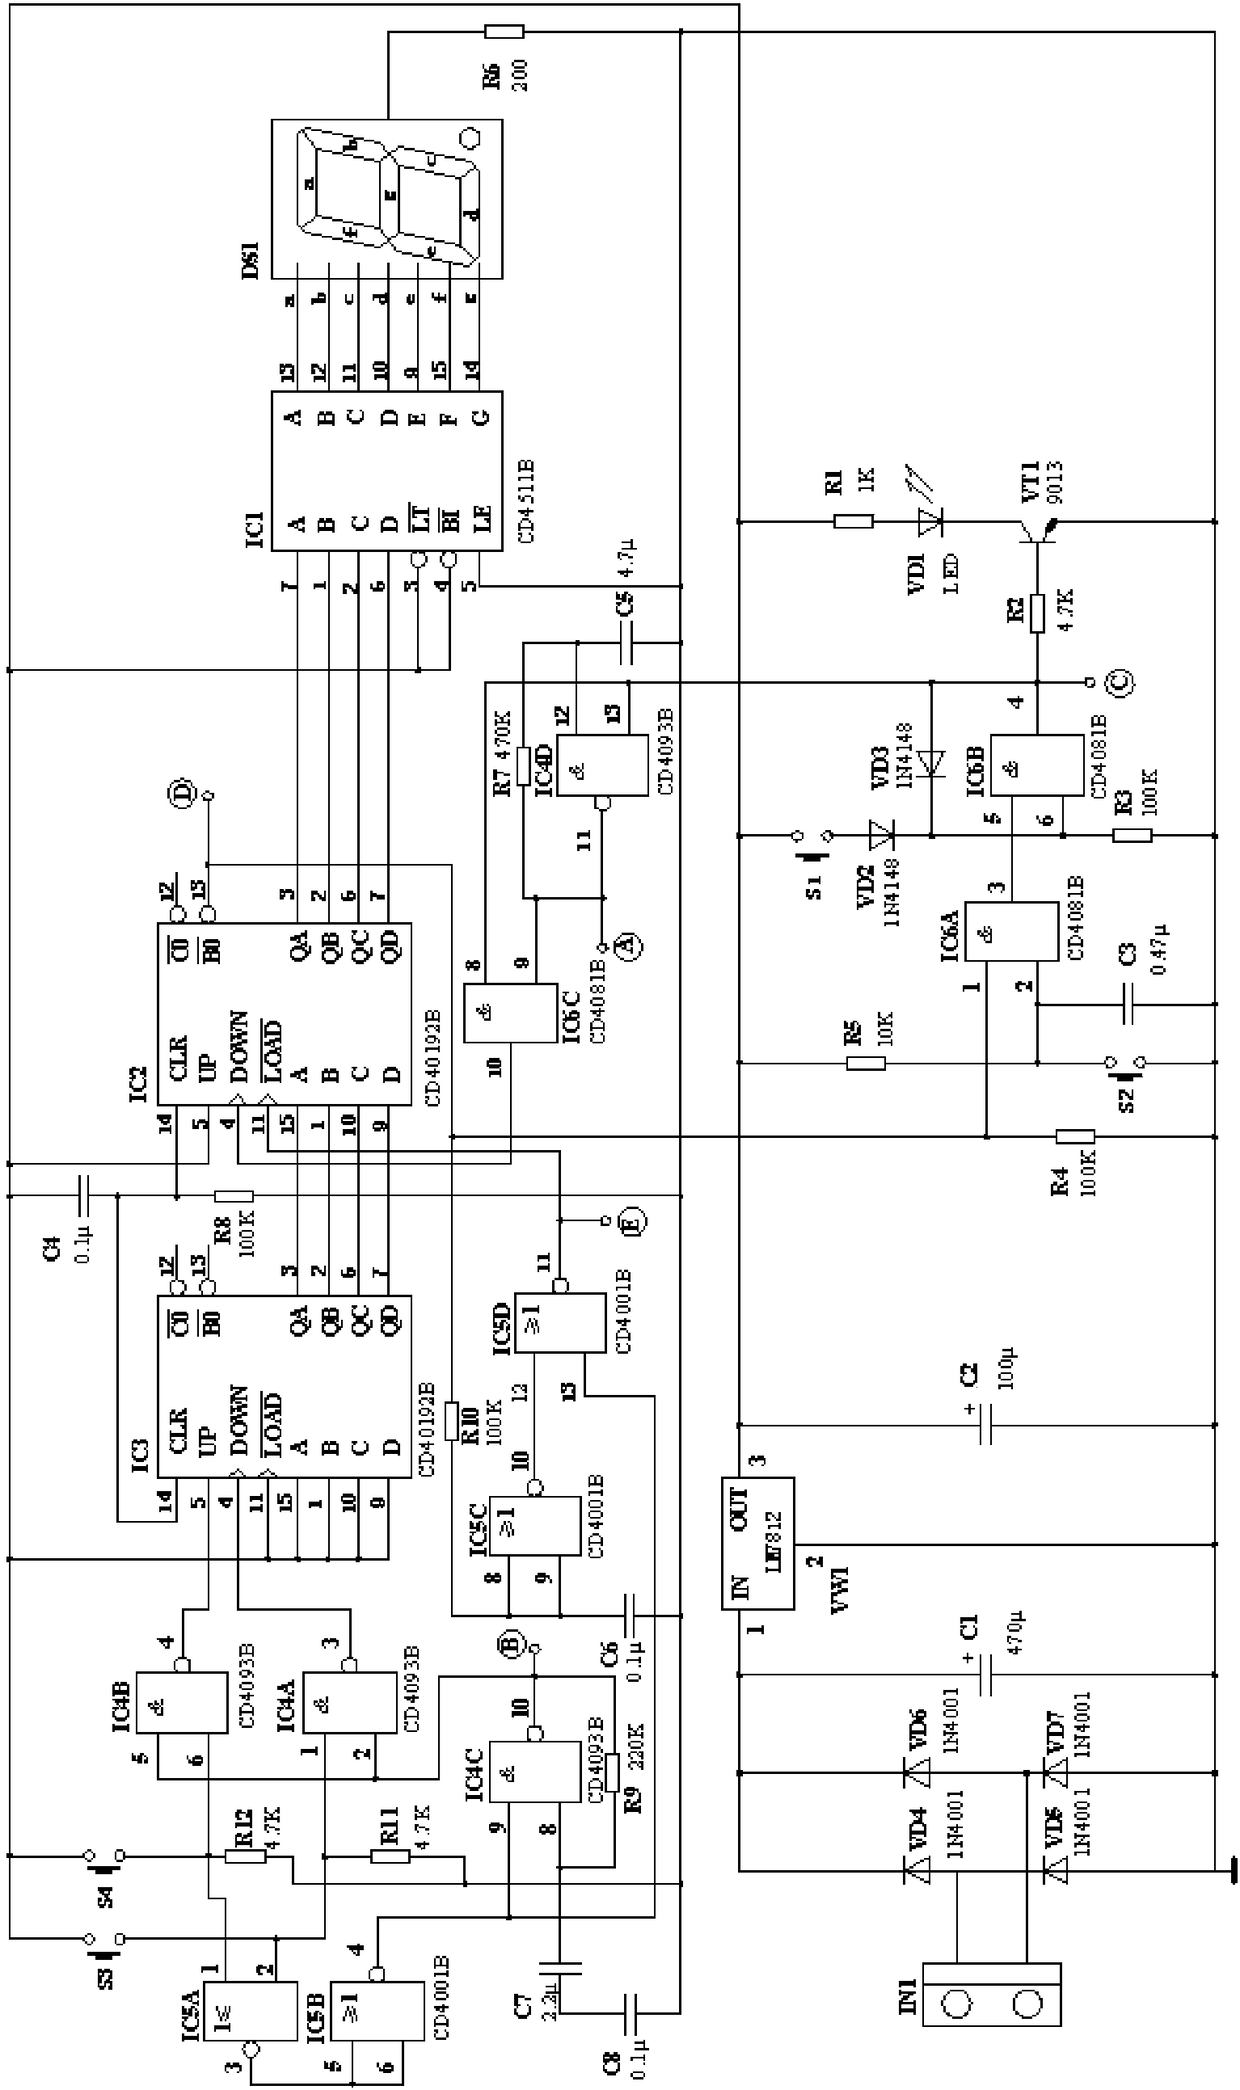 CD40192 control circuit for teaching